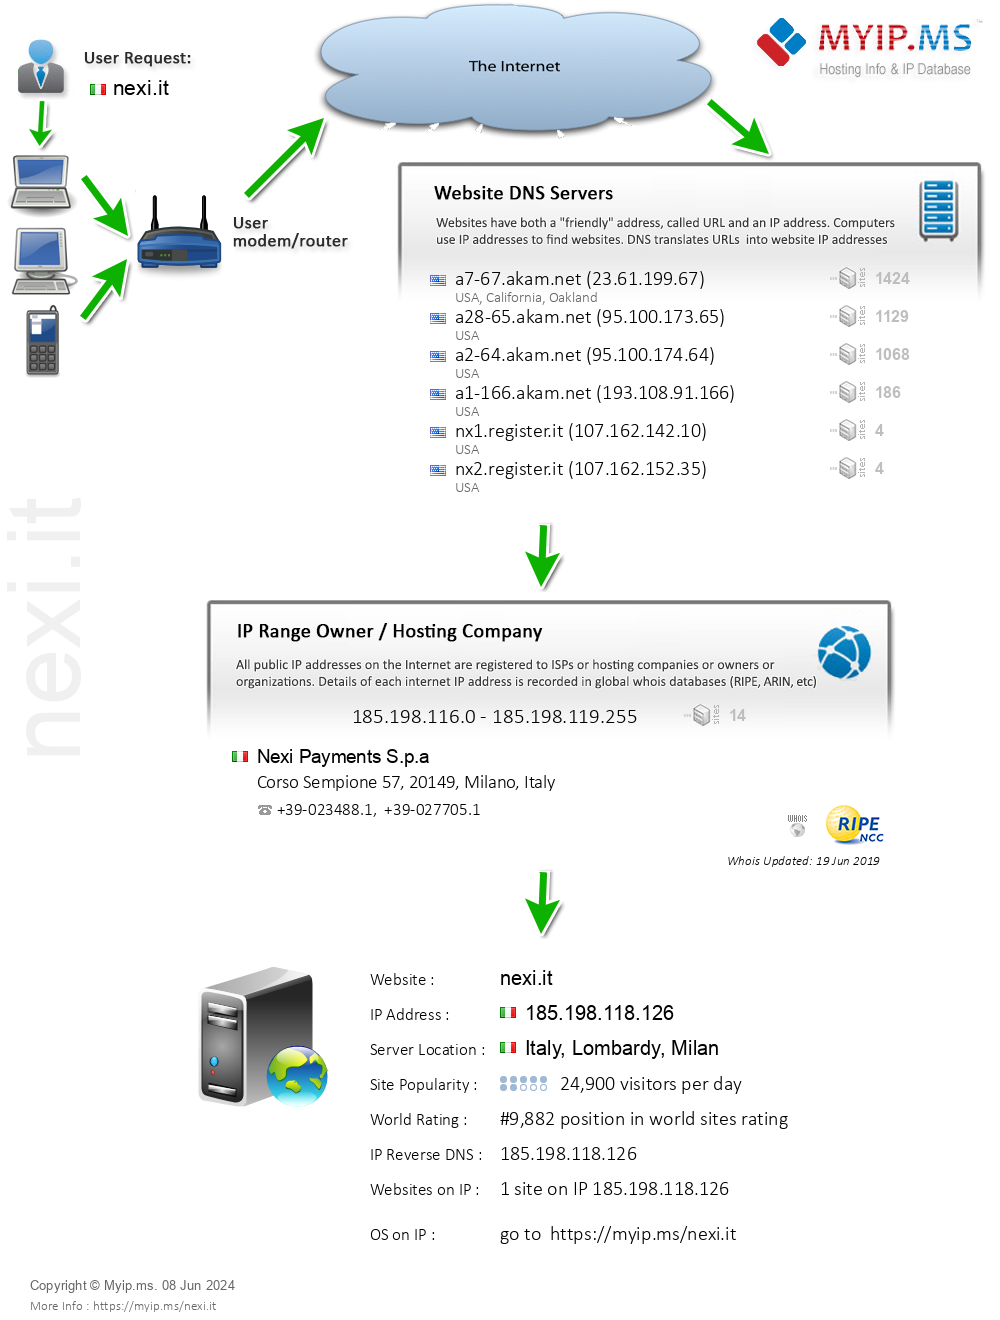 Nexi.it - Website Hosting Visual IP Diagram